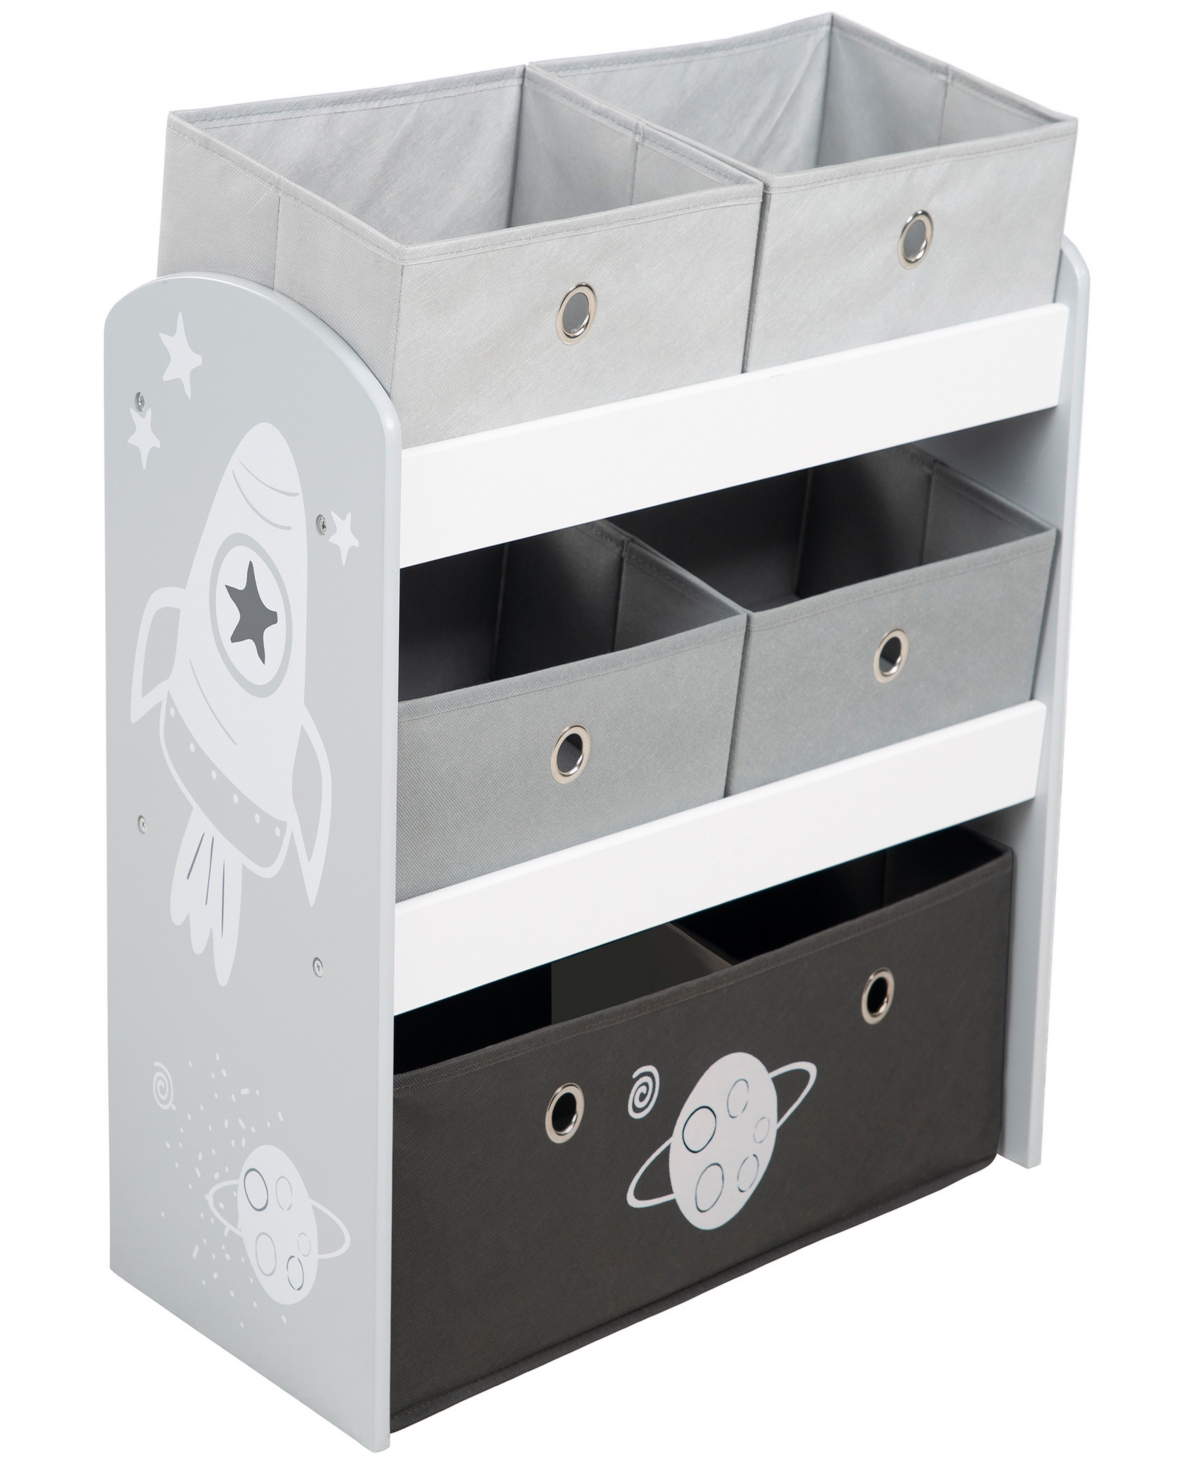 Roba-kids Play Shelf Stars Children's Multi Bin Toy Organizer Shelf Storage Cabinet With Fabric Boxes Set, 6 P